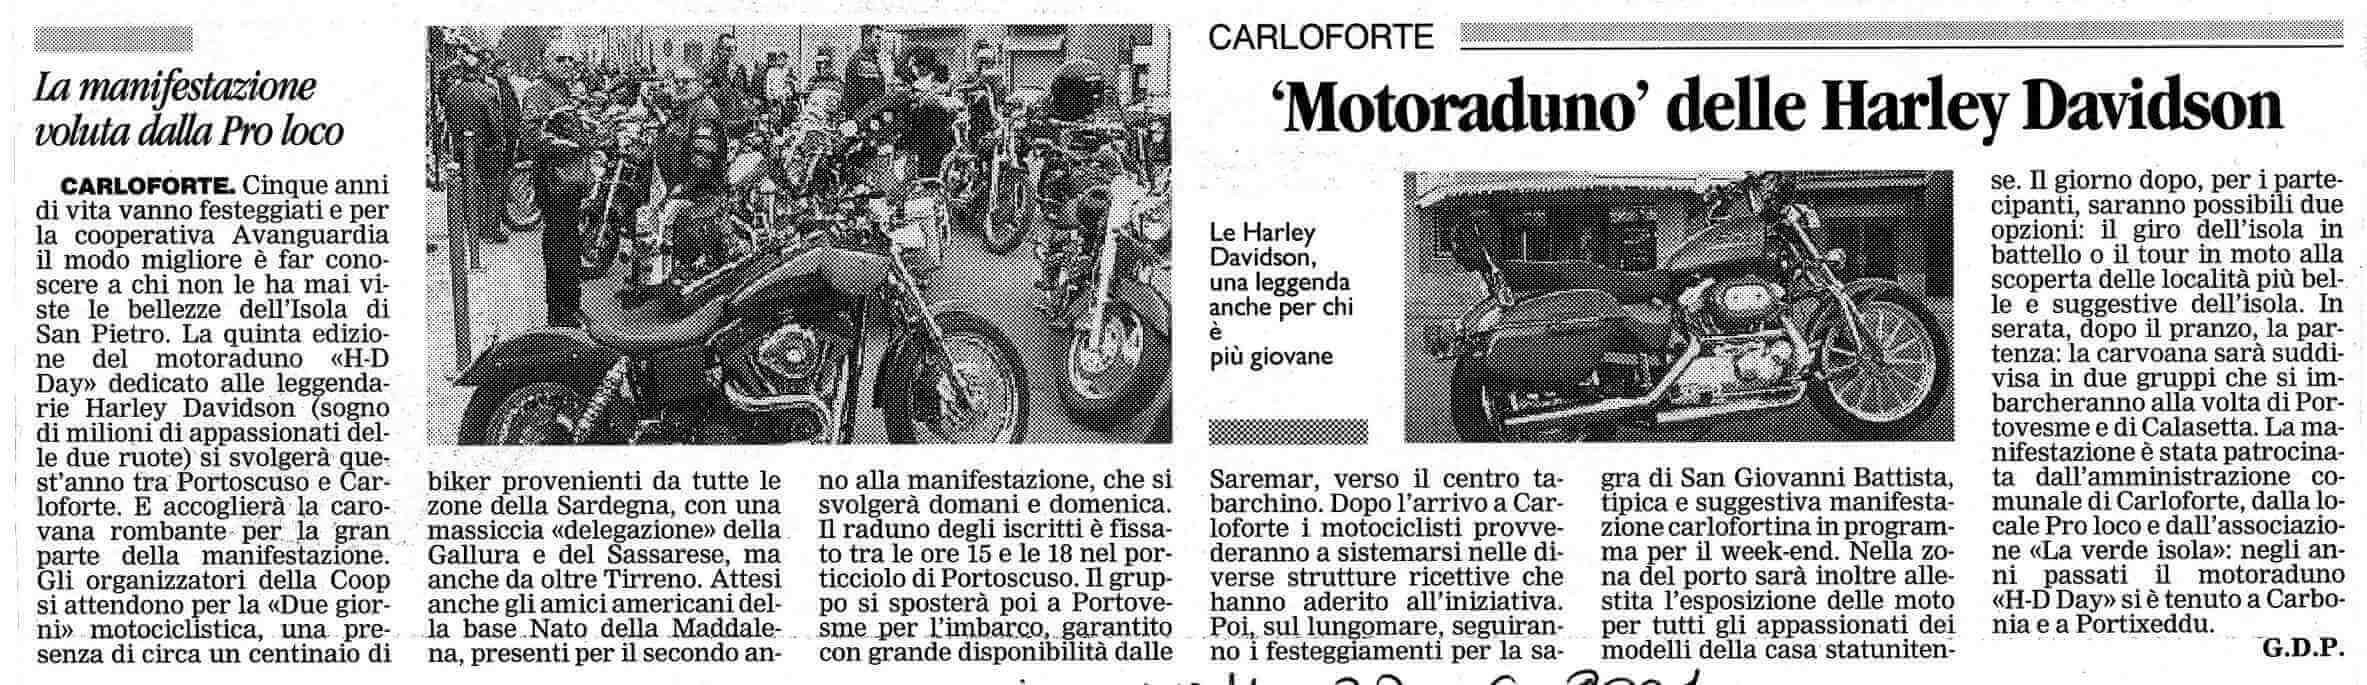 Articolo La Nuova motoraduno Carloforte 2001